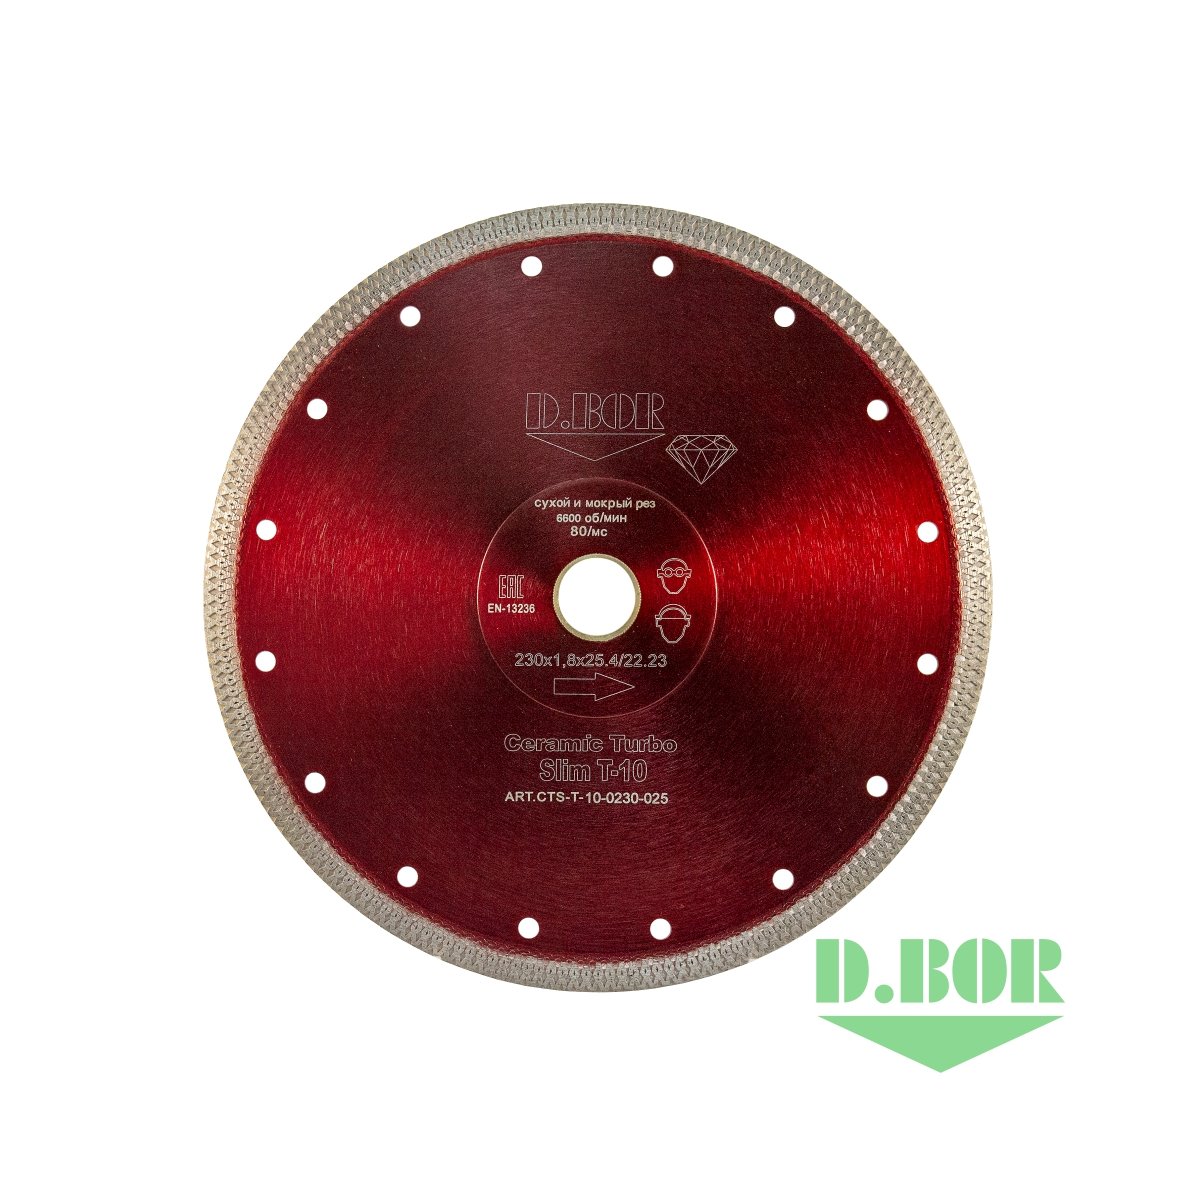 Алмазный диск Ceramic Turbo Slim T-10, 230x1,8x25,4/22,23 (арт. CTS-T-10-0230-025) "D.BOR"